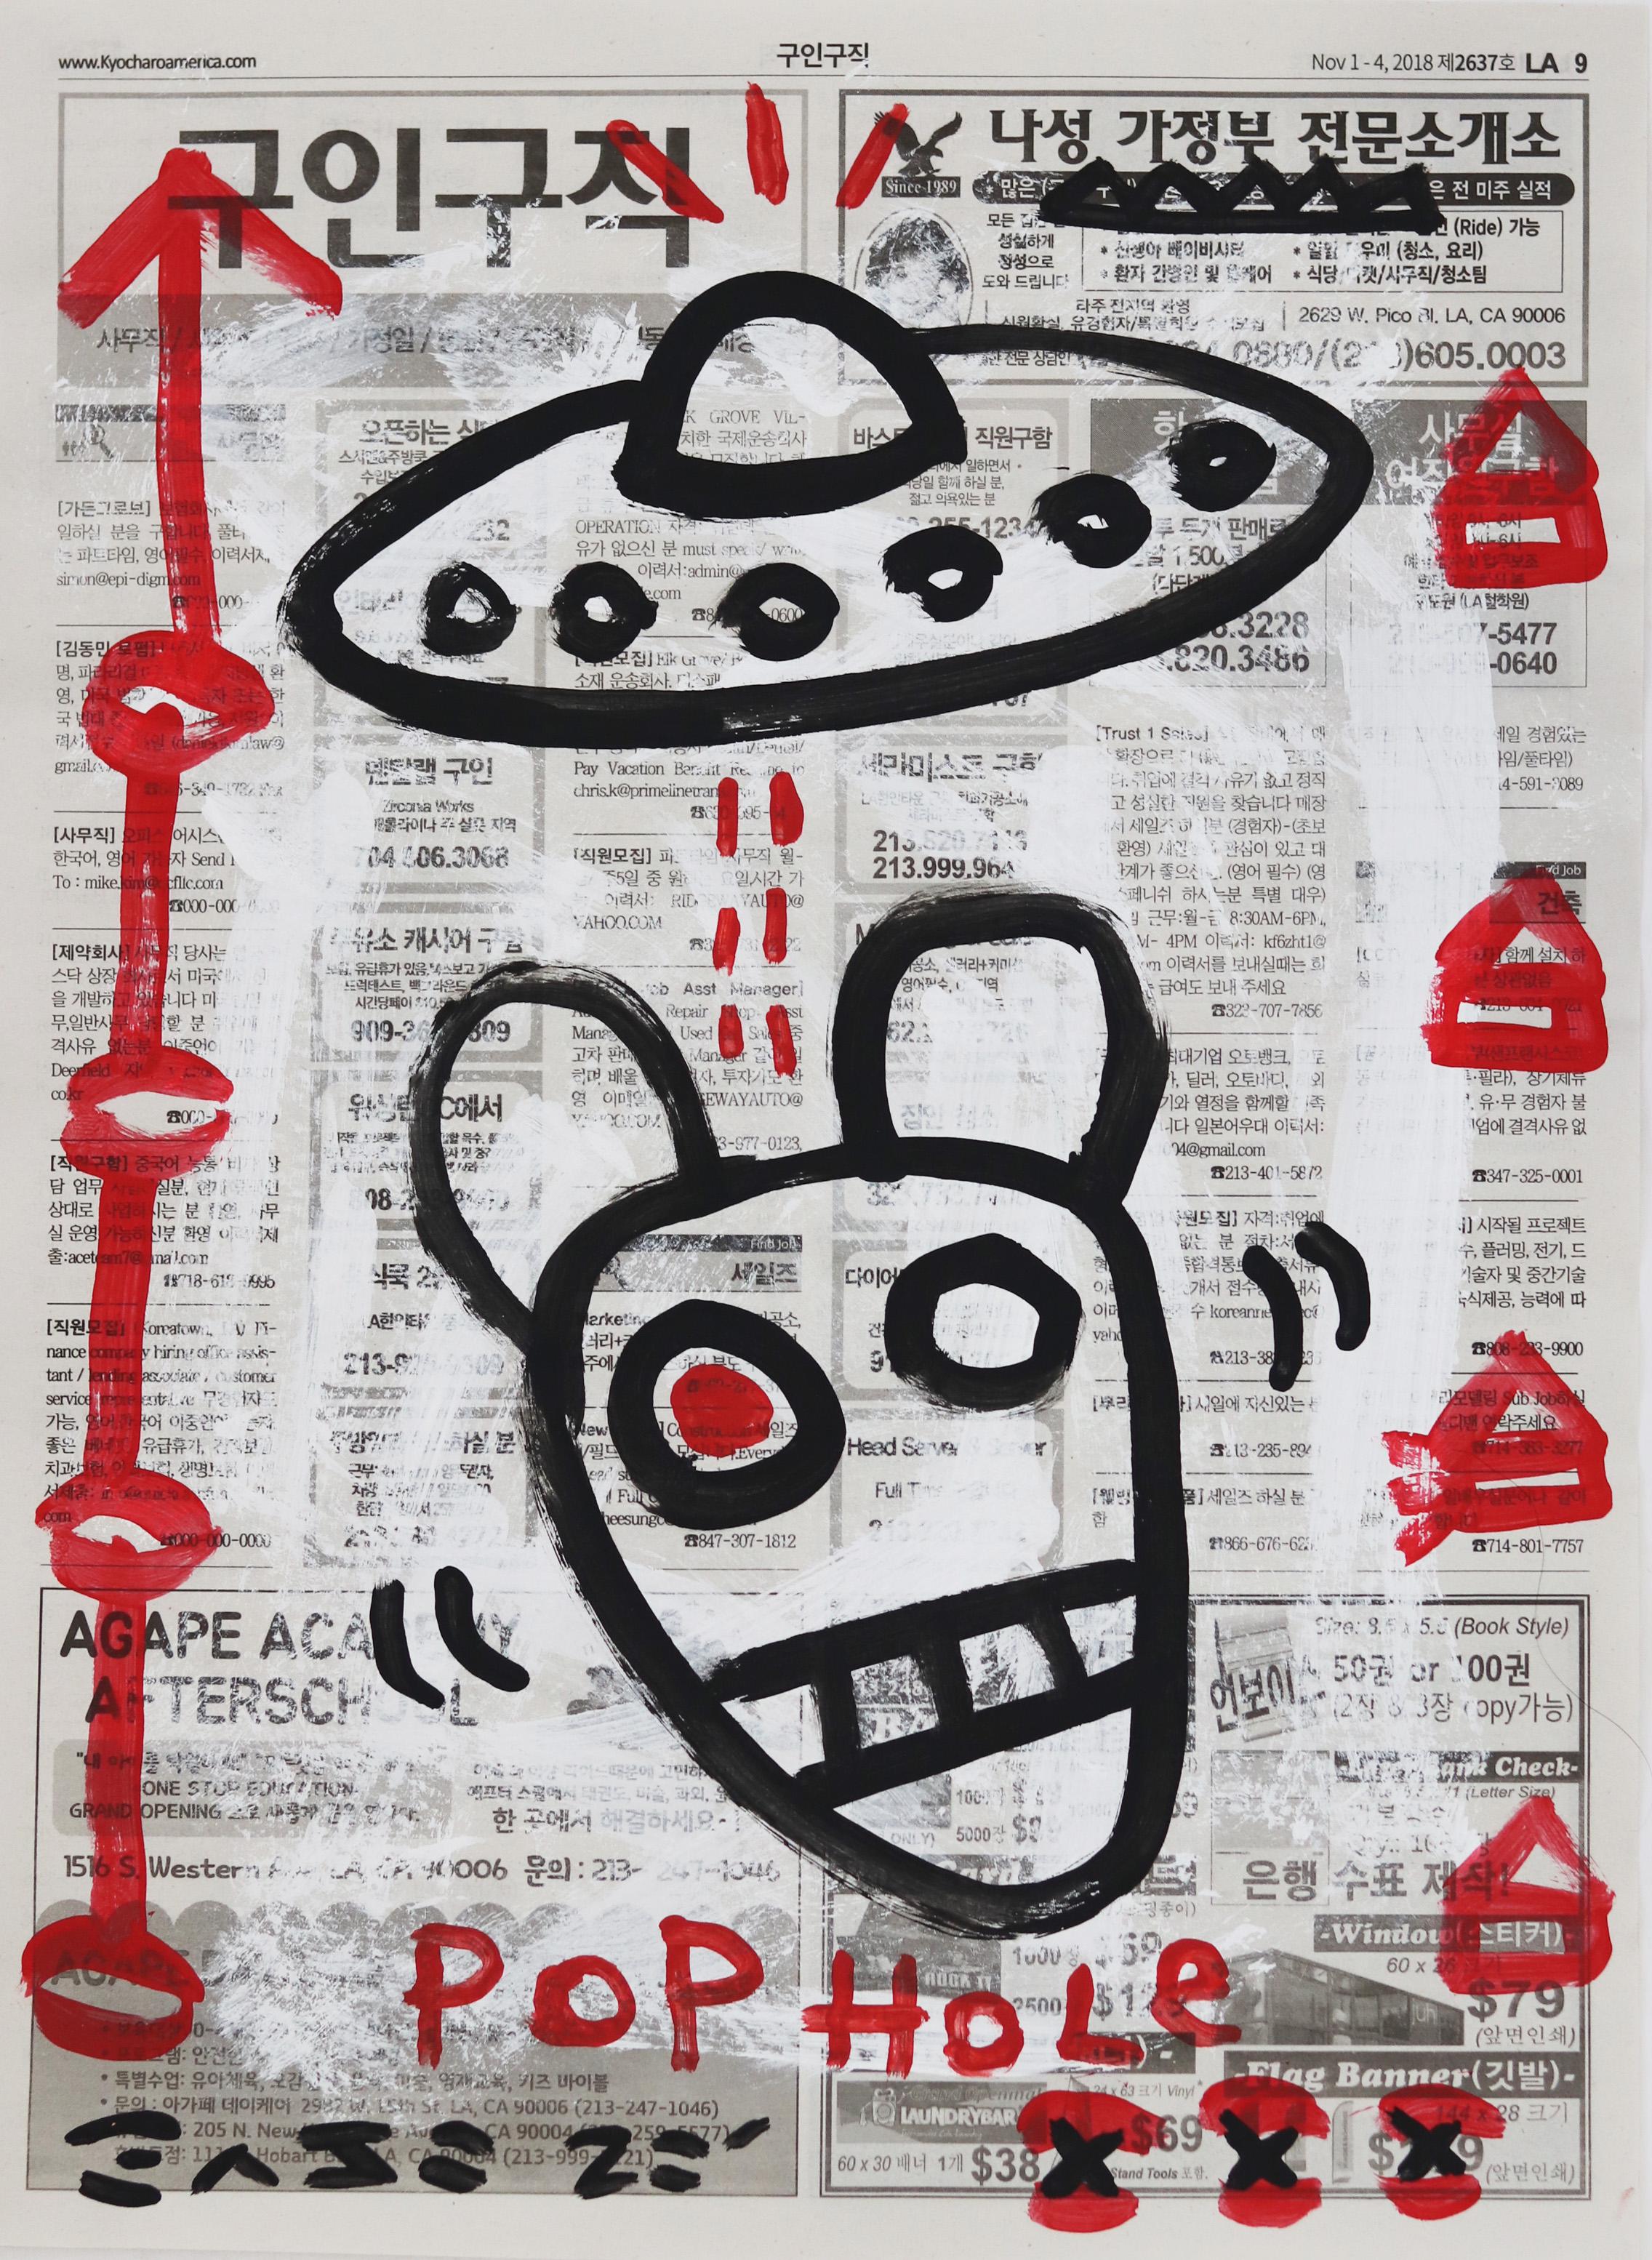 Mission Pophole - Original Gary John Pop Art UFO Painting on Newspaper